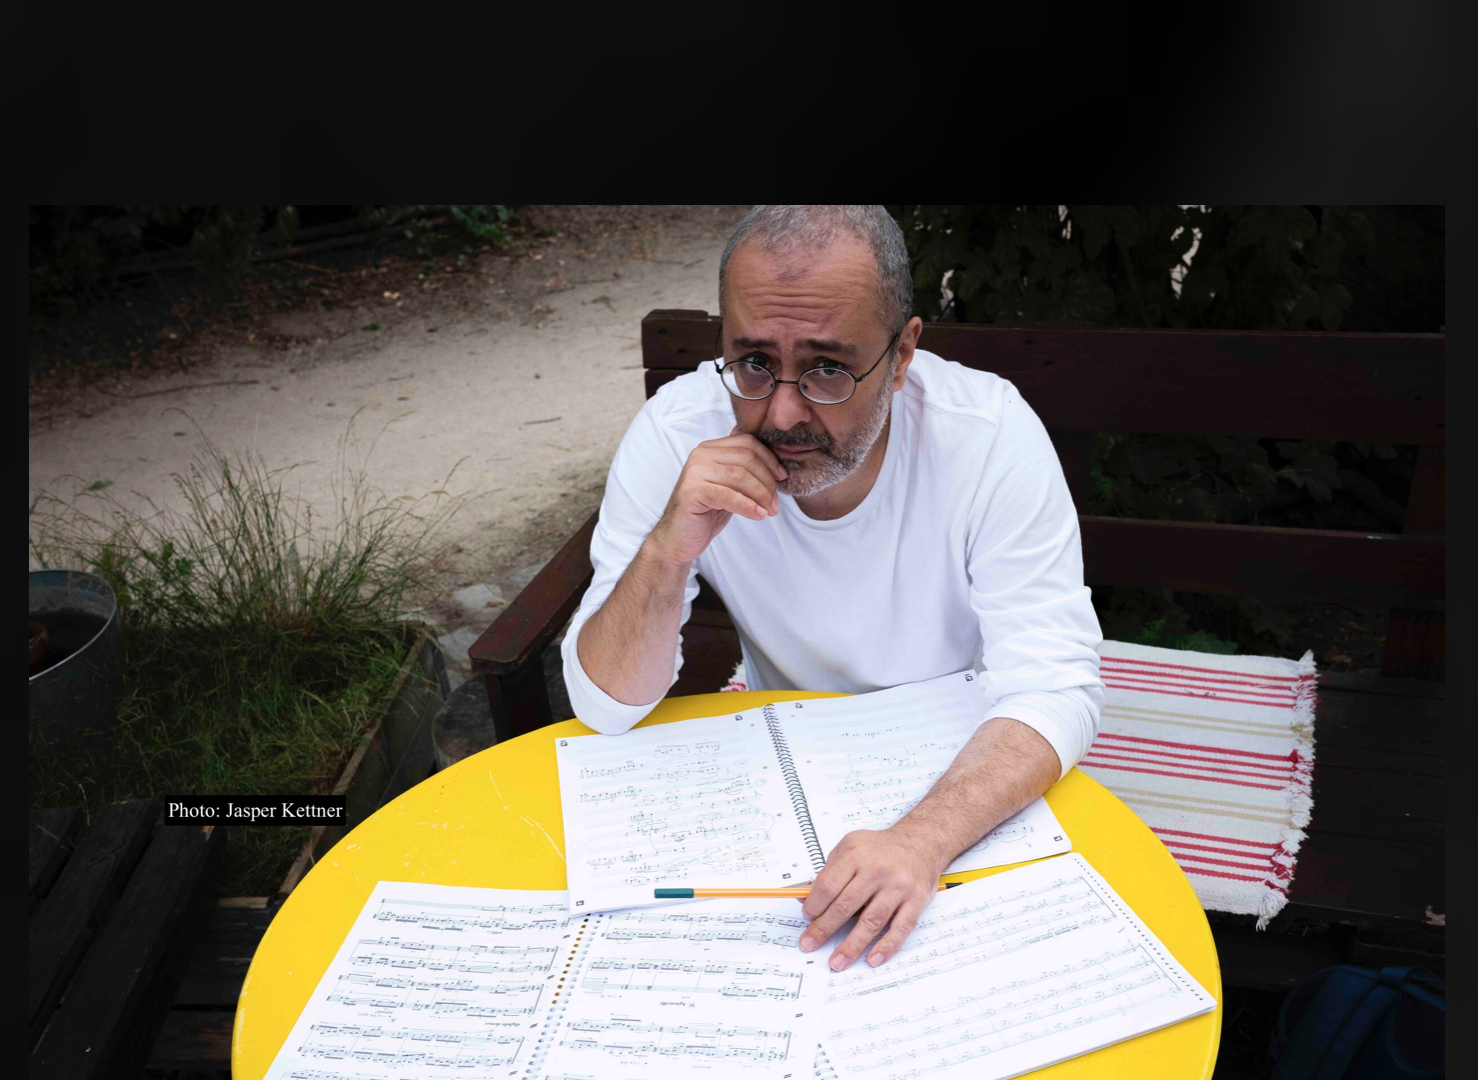 Emre Dündar, composer-performer